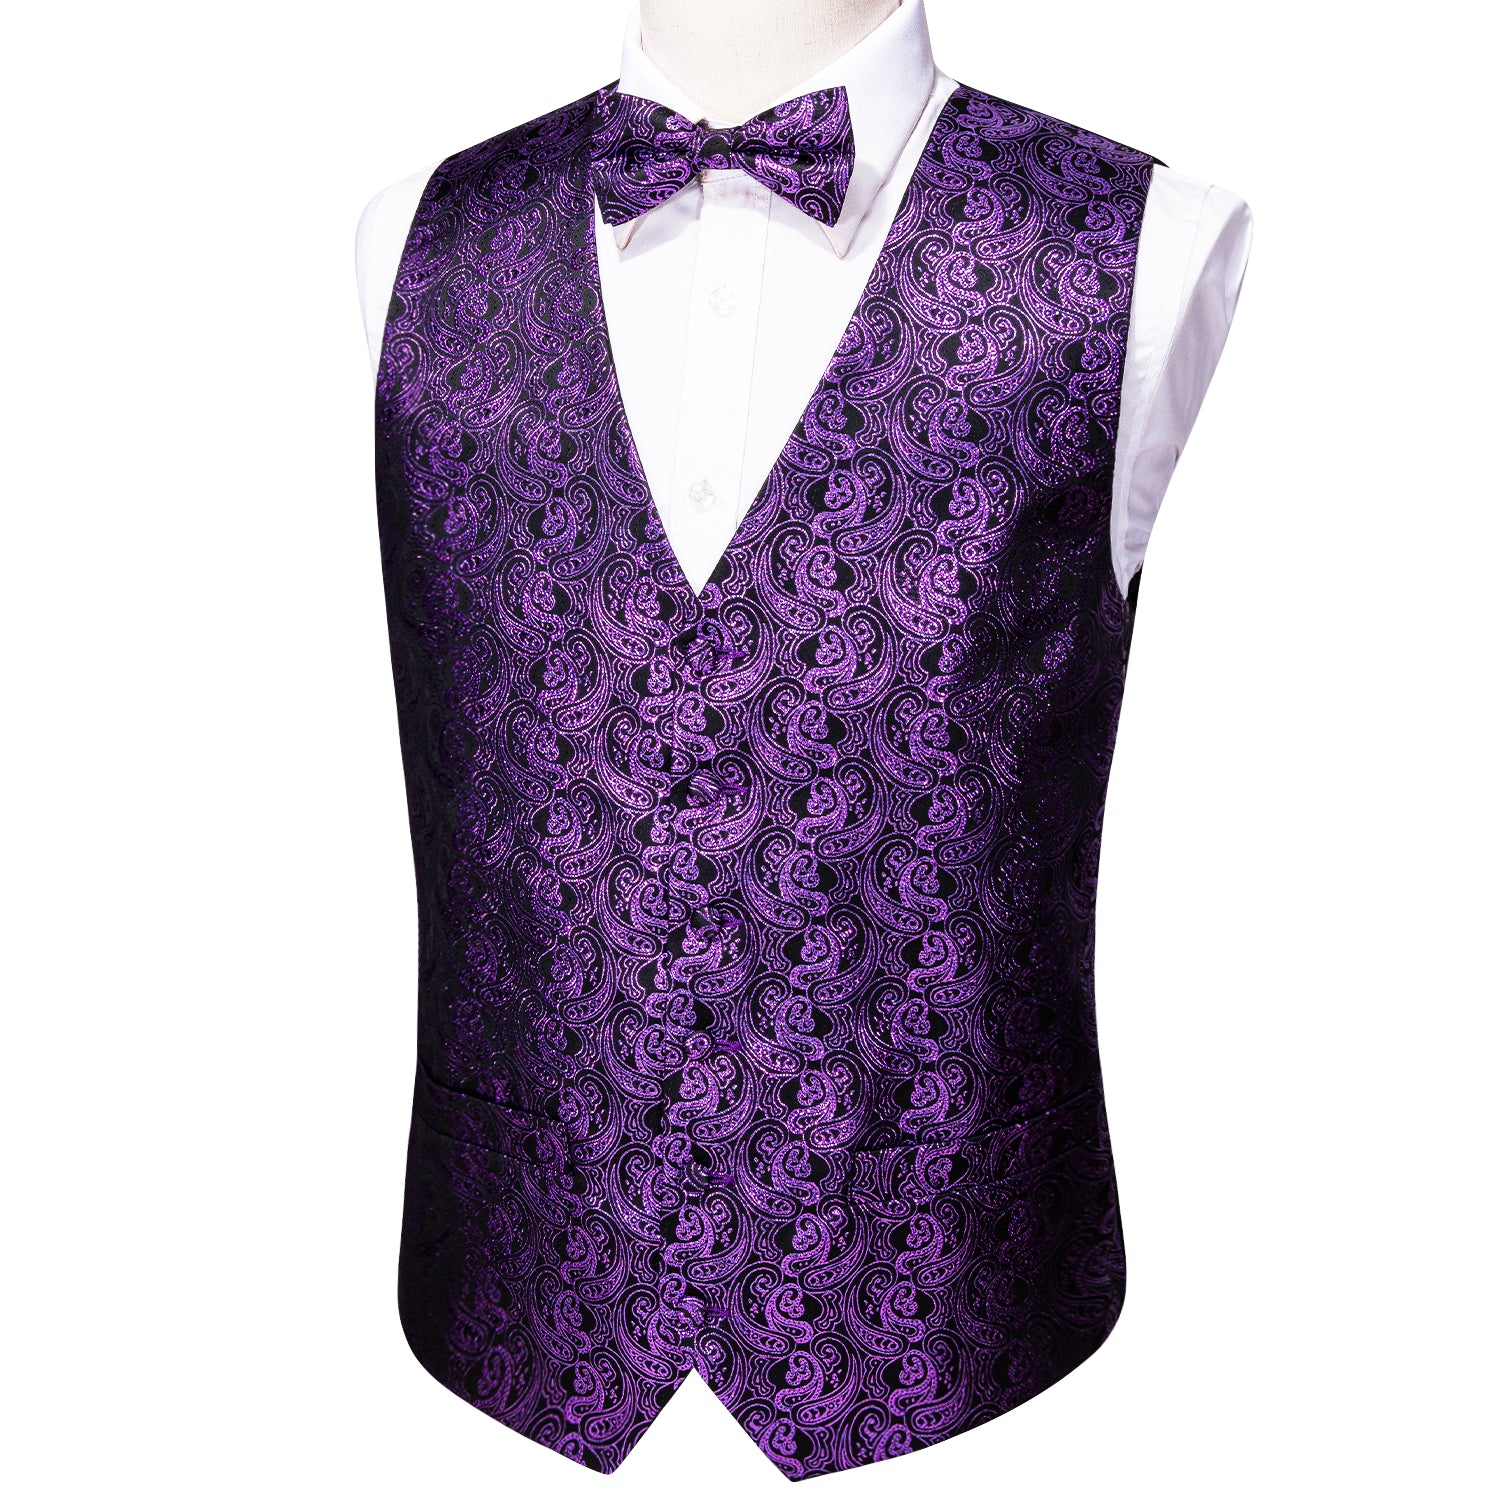 purple tuxedo vest